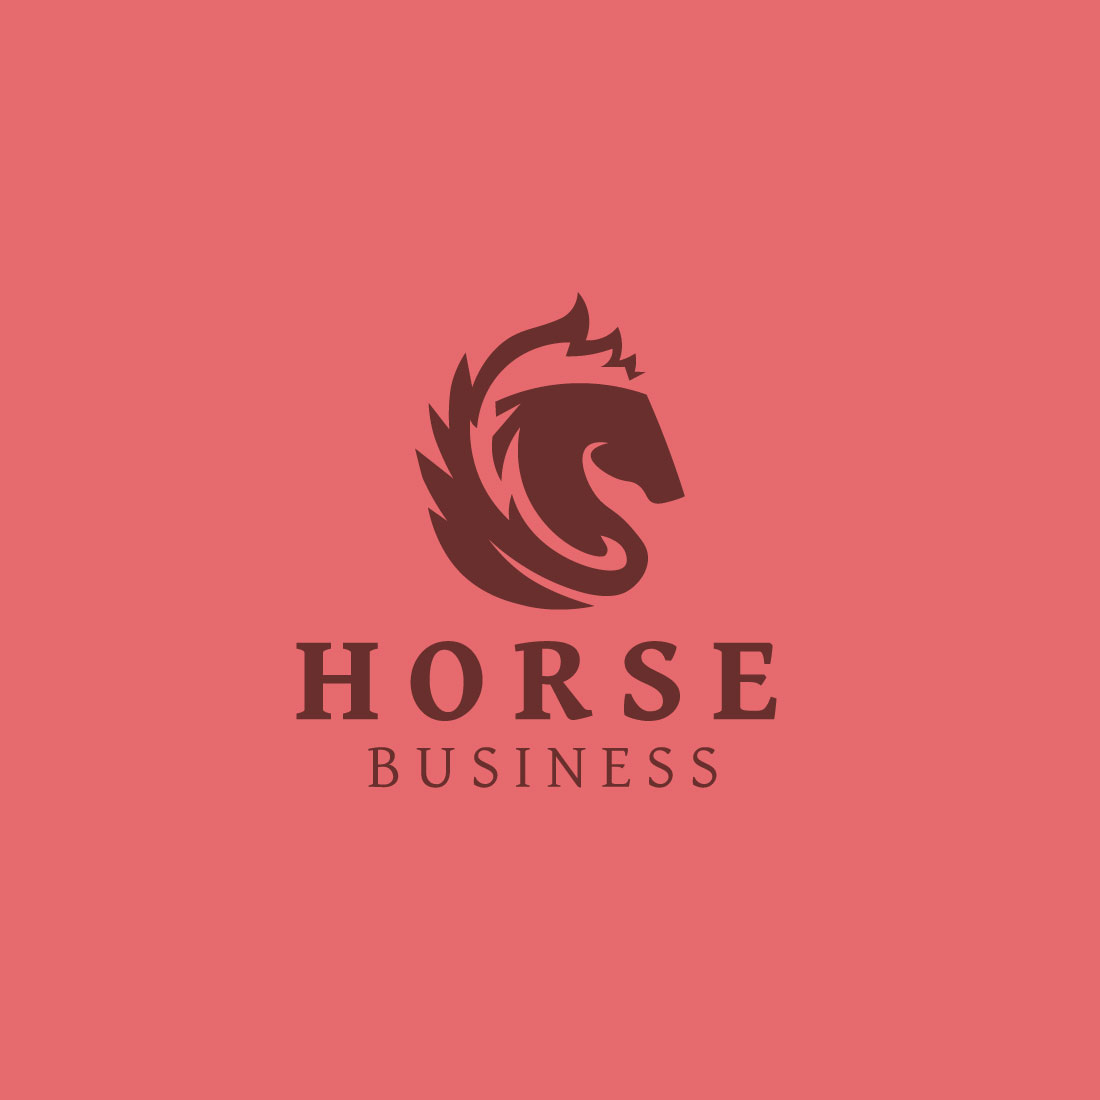 Fire Horse Logo design preview image.